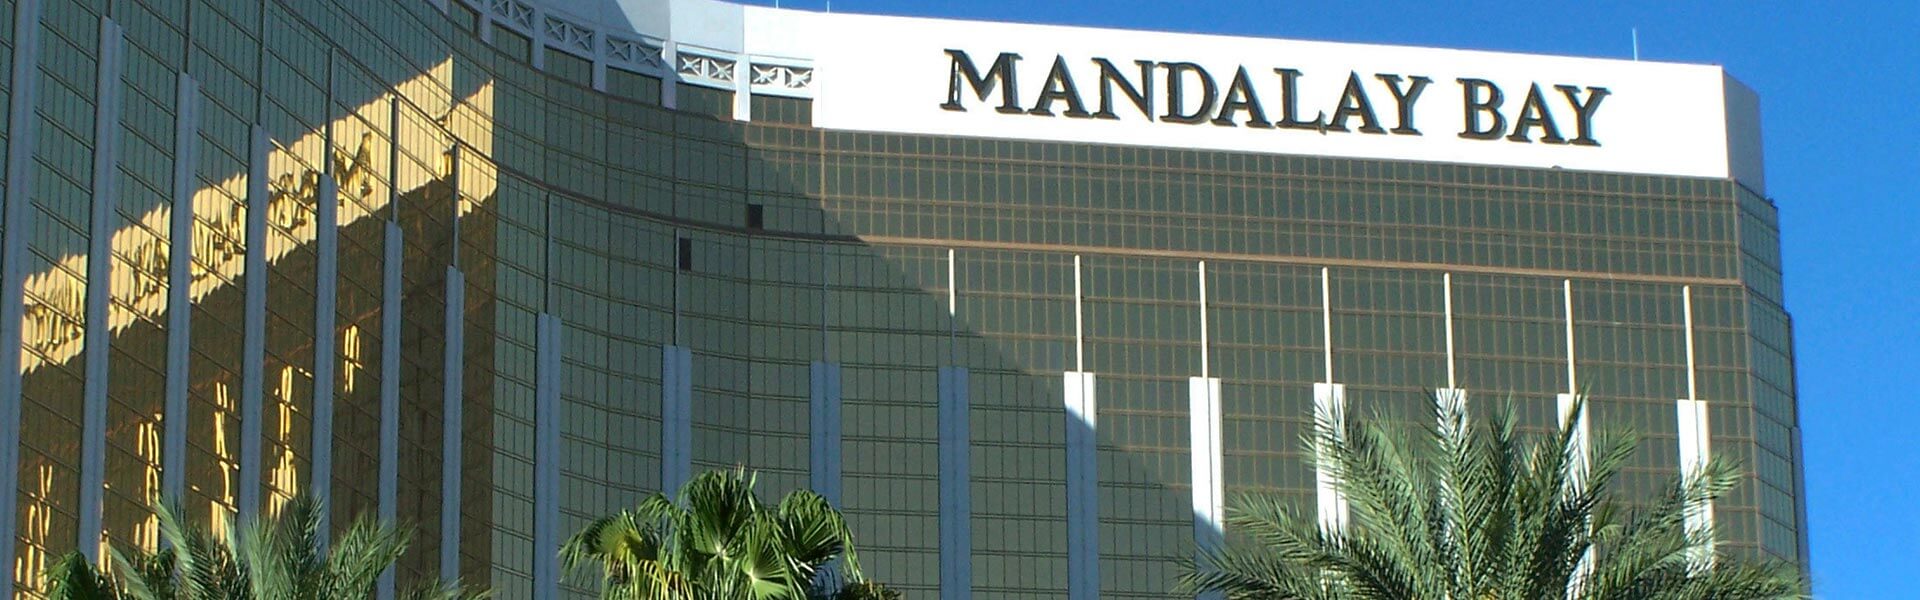 Mandalay Bay Hotel & Casino Tour